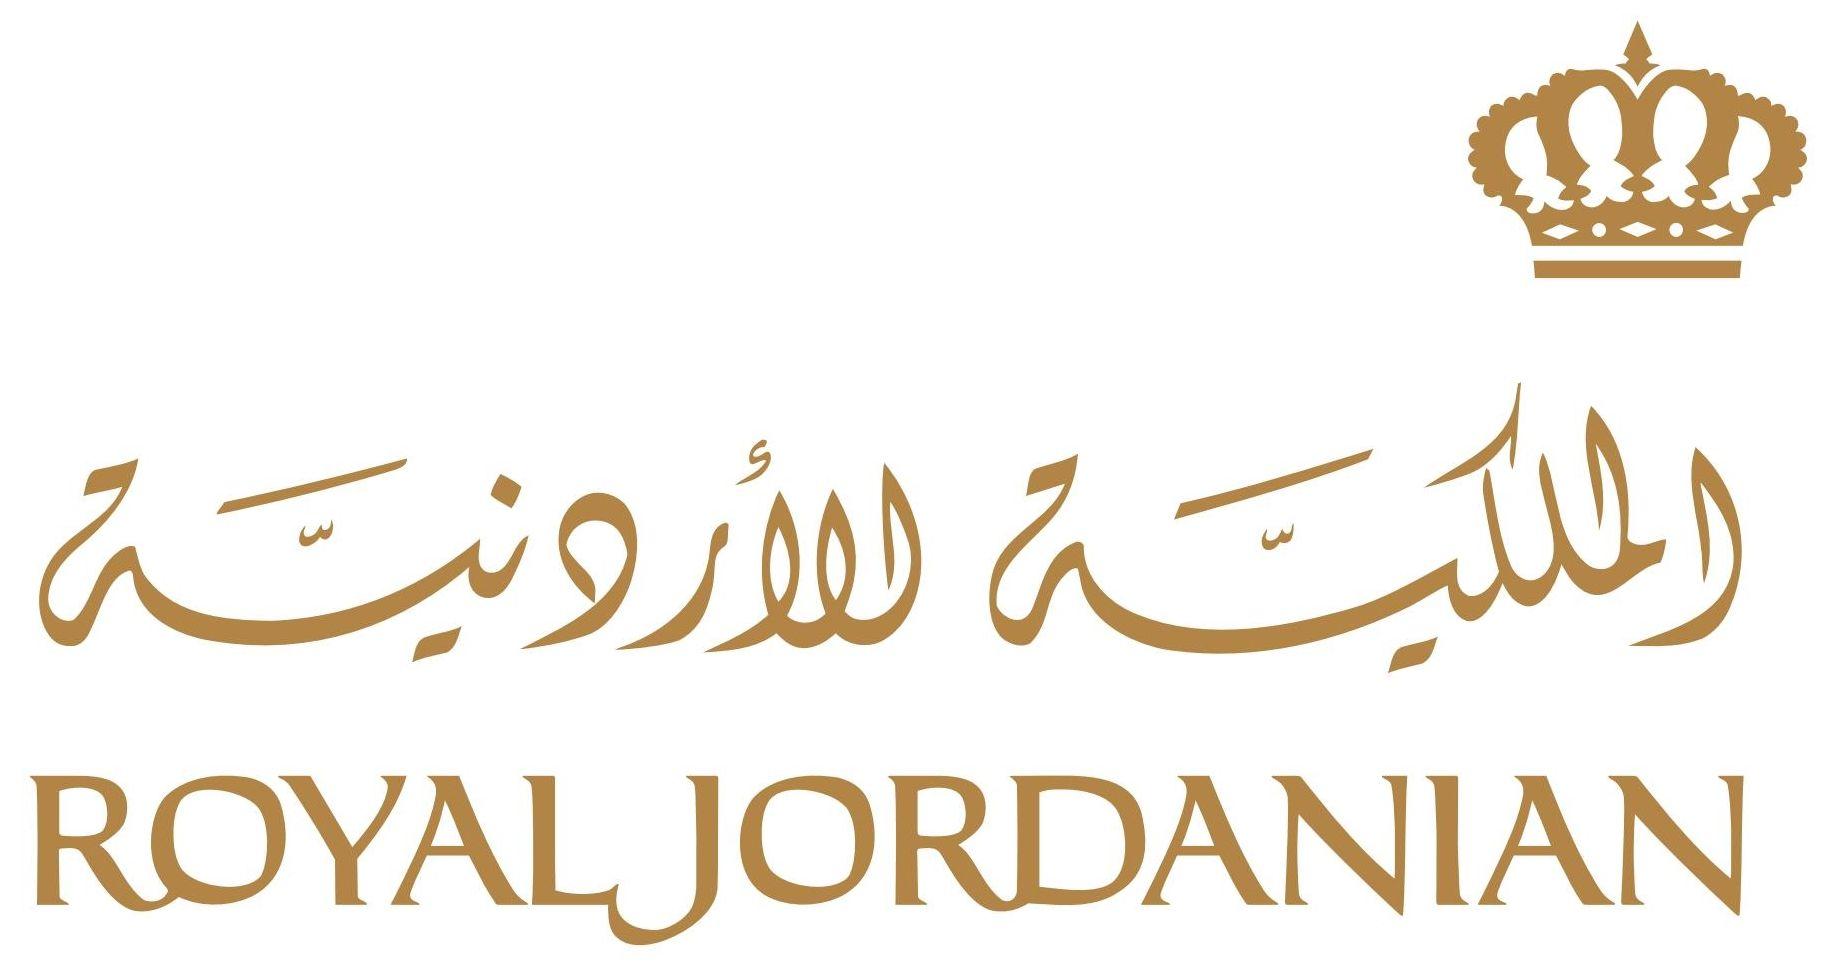 Gold Airline Logo - Royal Jordanian Airlines Logo | Airline Logos in 2019 | Airline logo ...